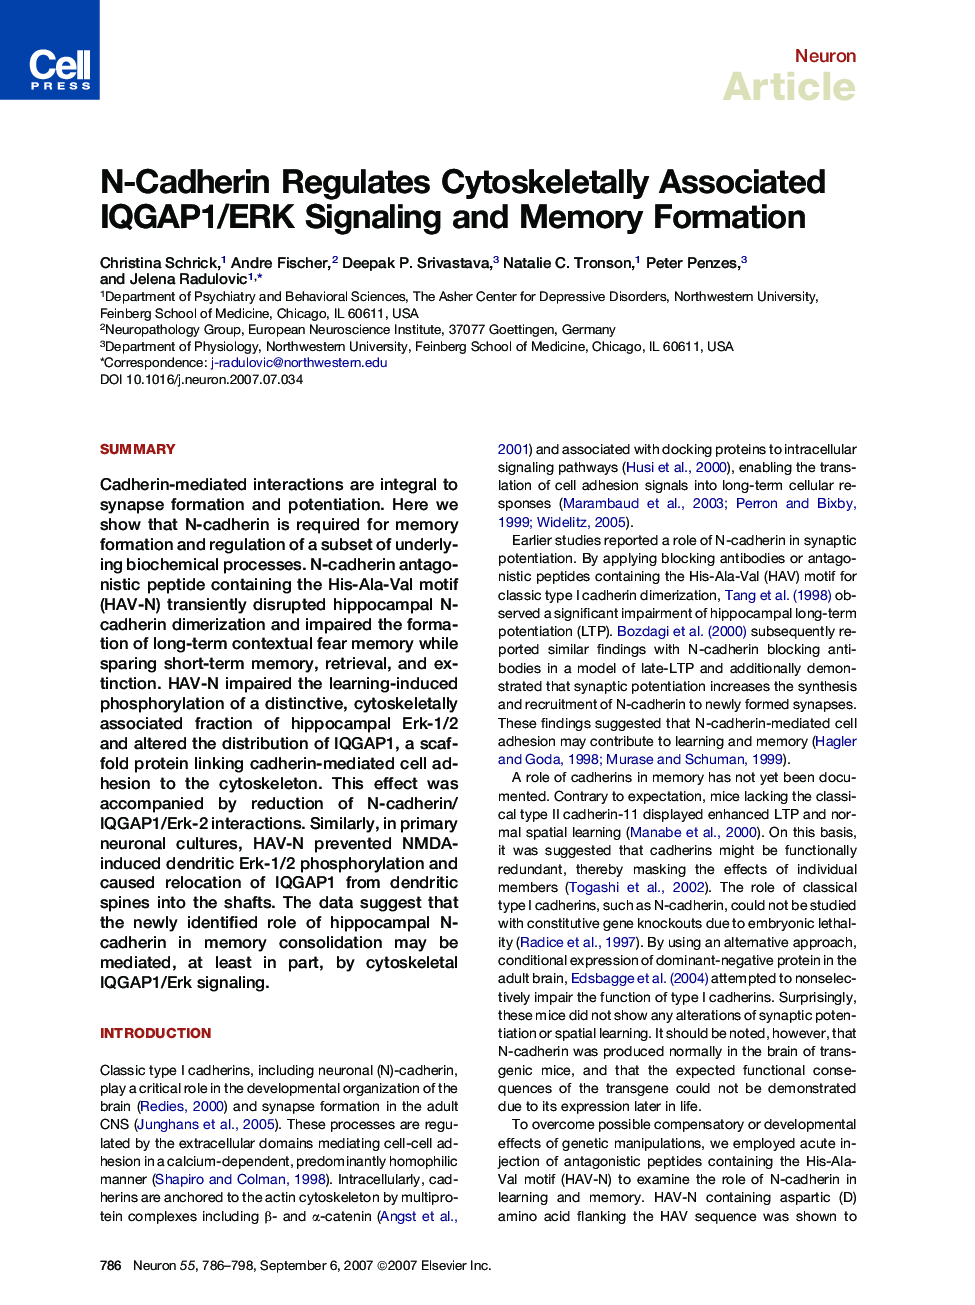 N-Cadherin Regulates Cytoskeletally Associated IQGAP1/ERK Signaling and Memory Formation